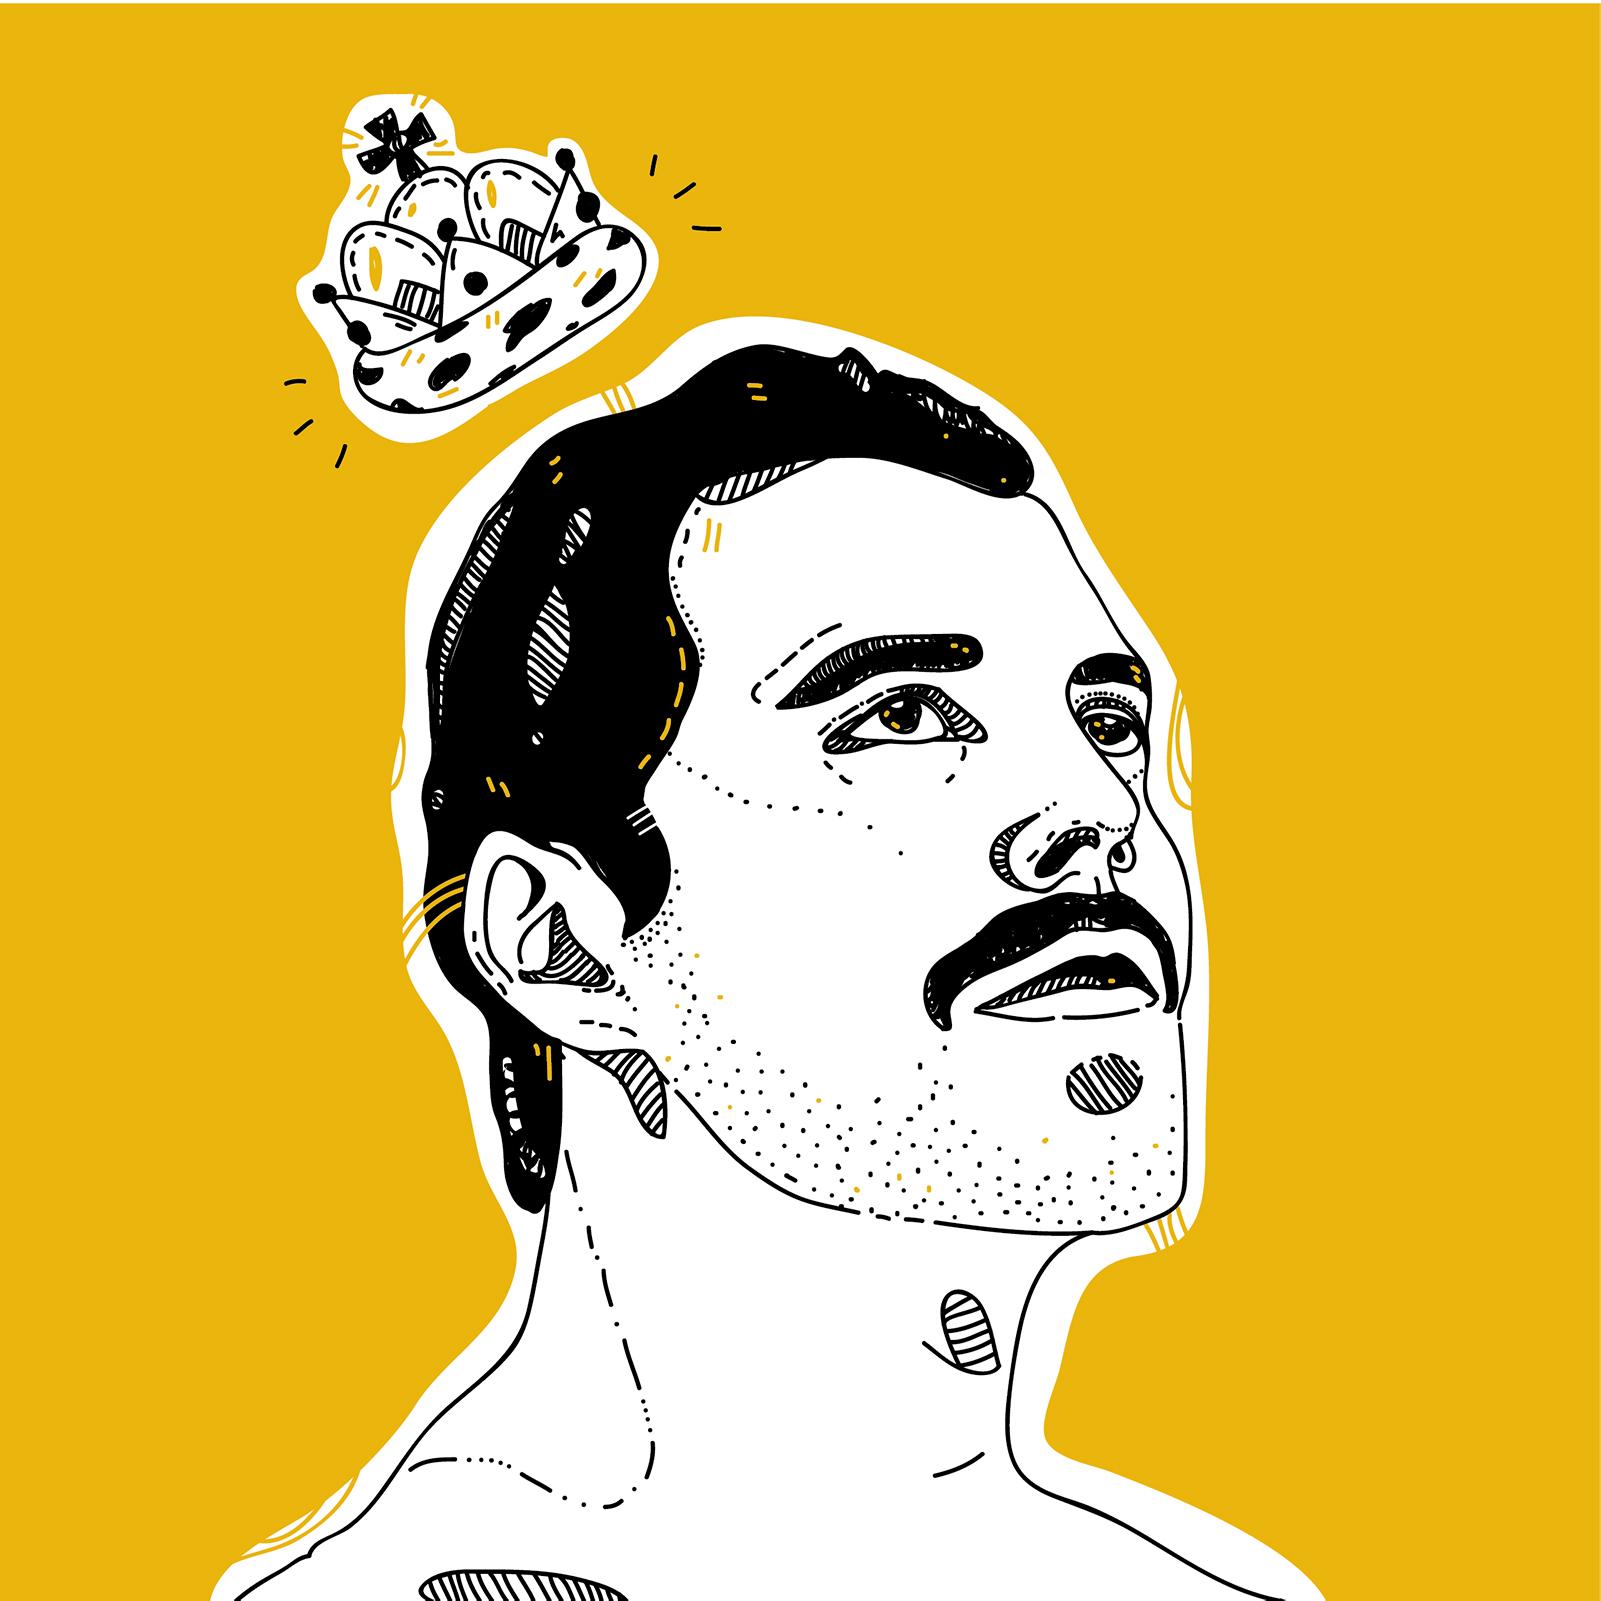 Freddie Mercury from Queen